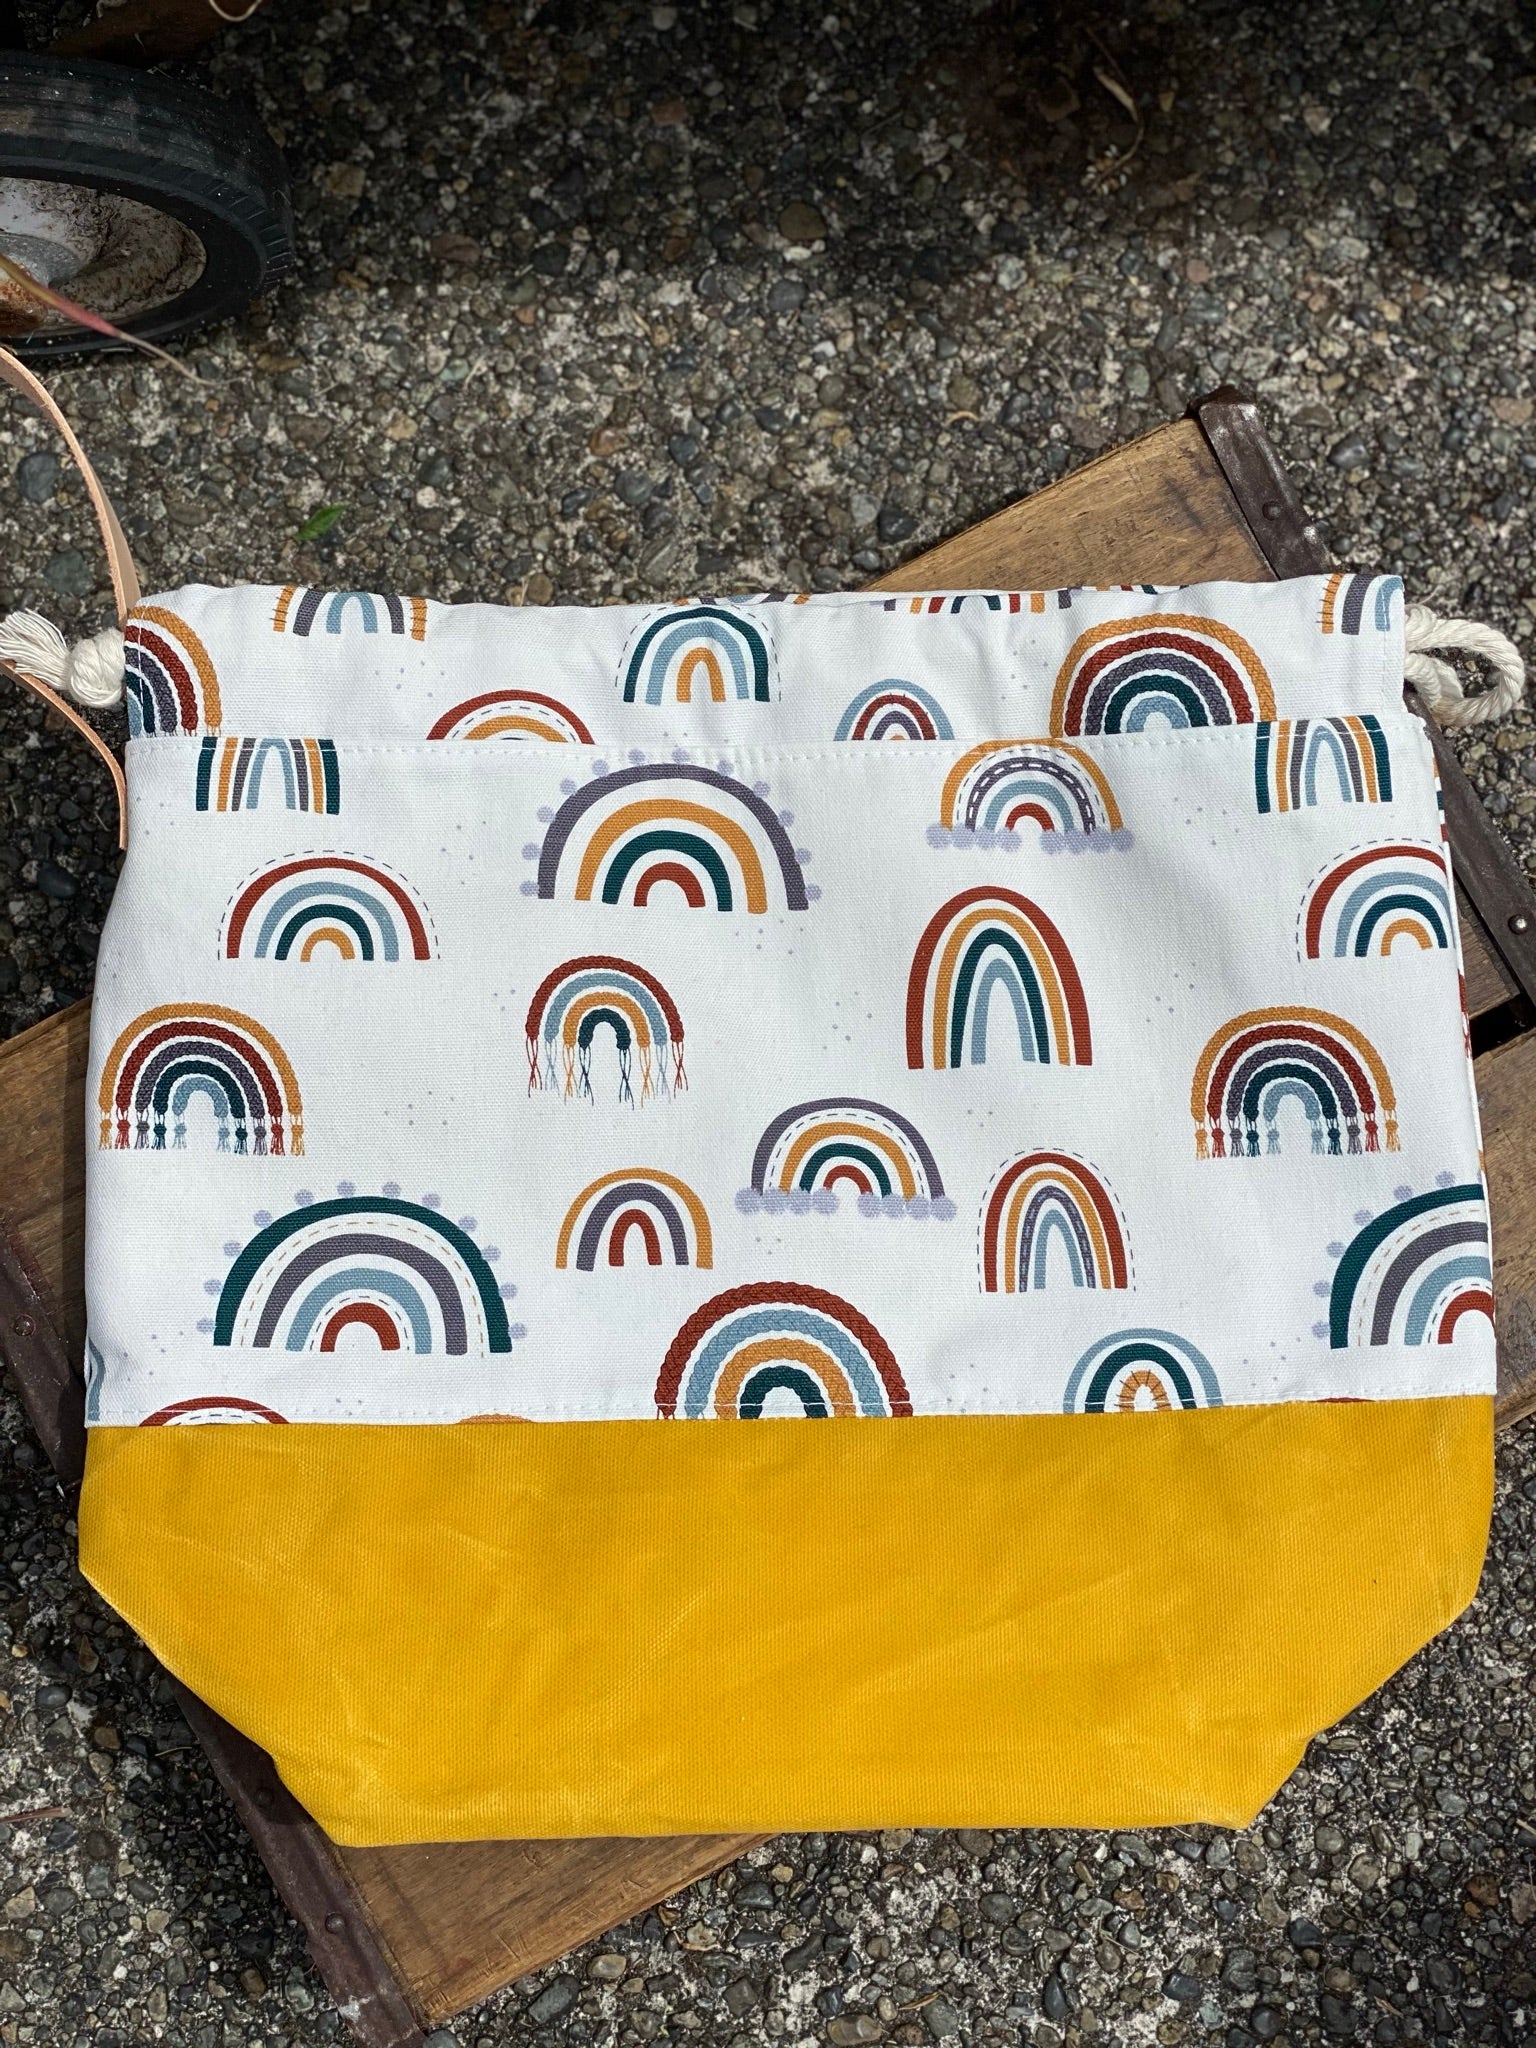 Rainbow Macrame Canvas Project Bag